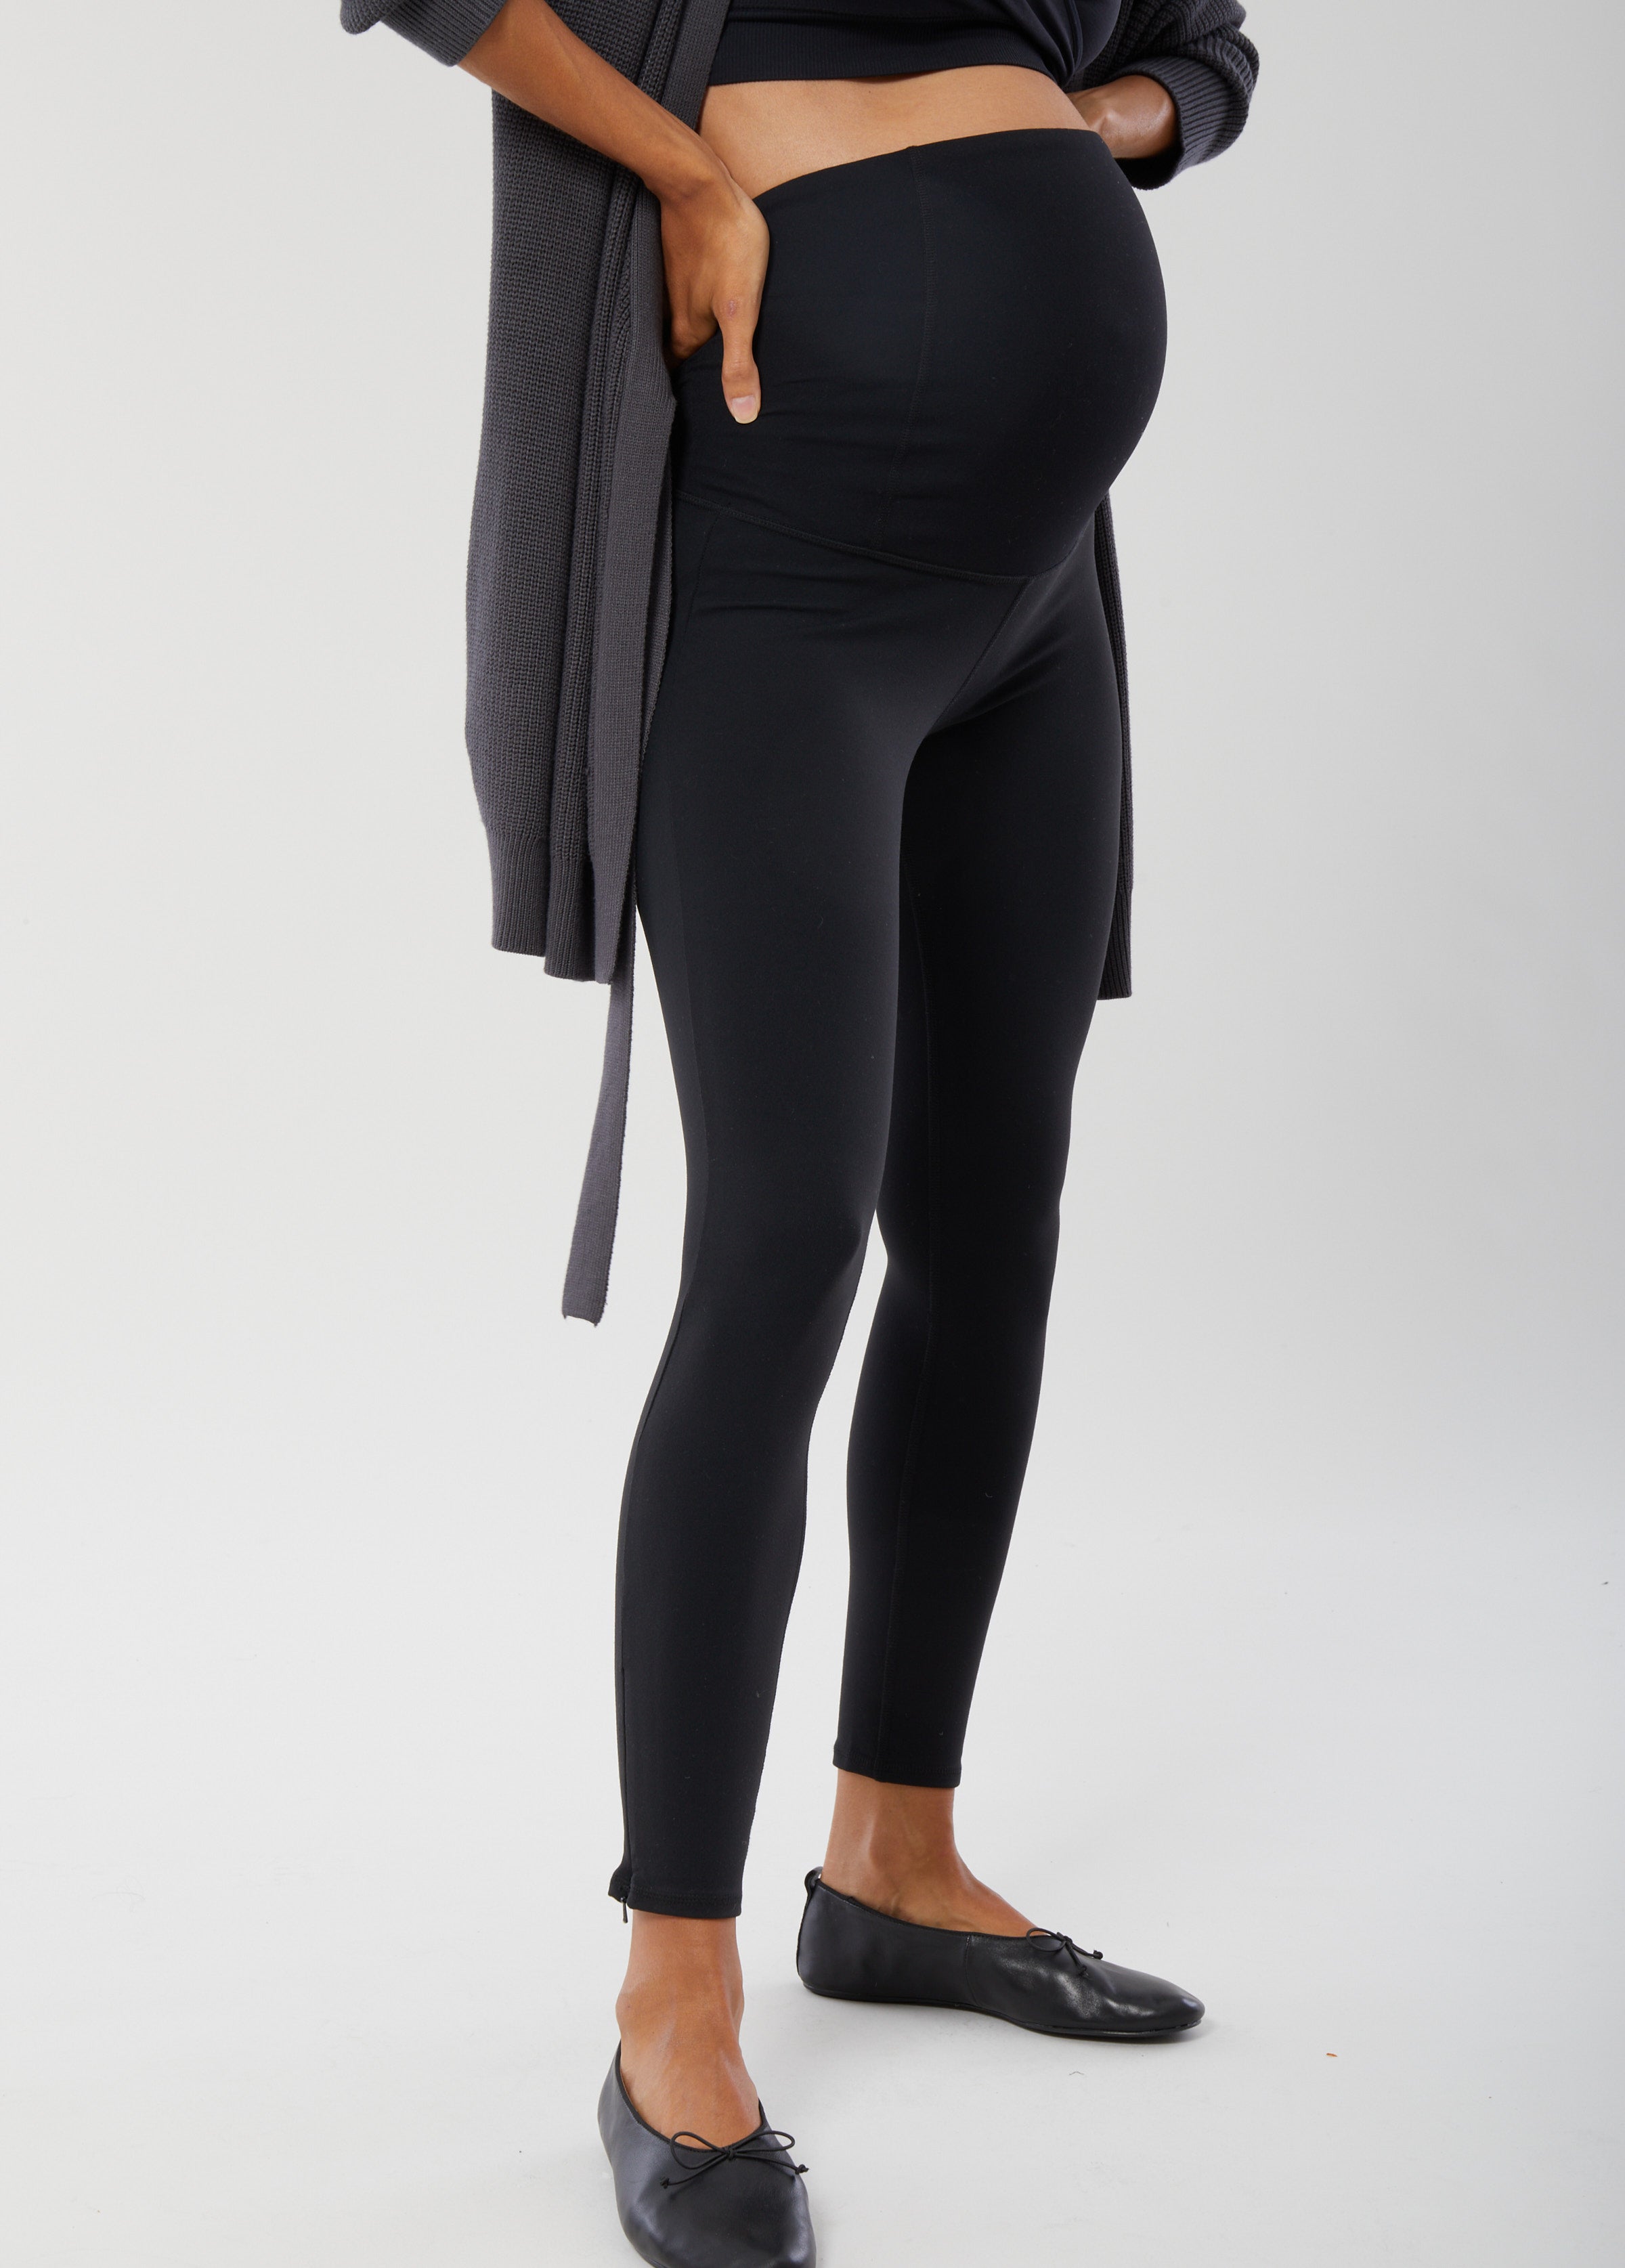 Maternity Leggings For Pregnant Women - Autumn Winter Fashion Soild Pr 